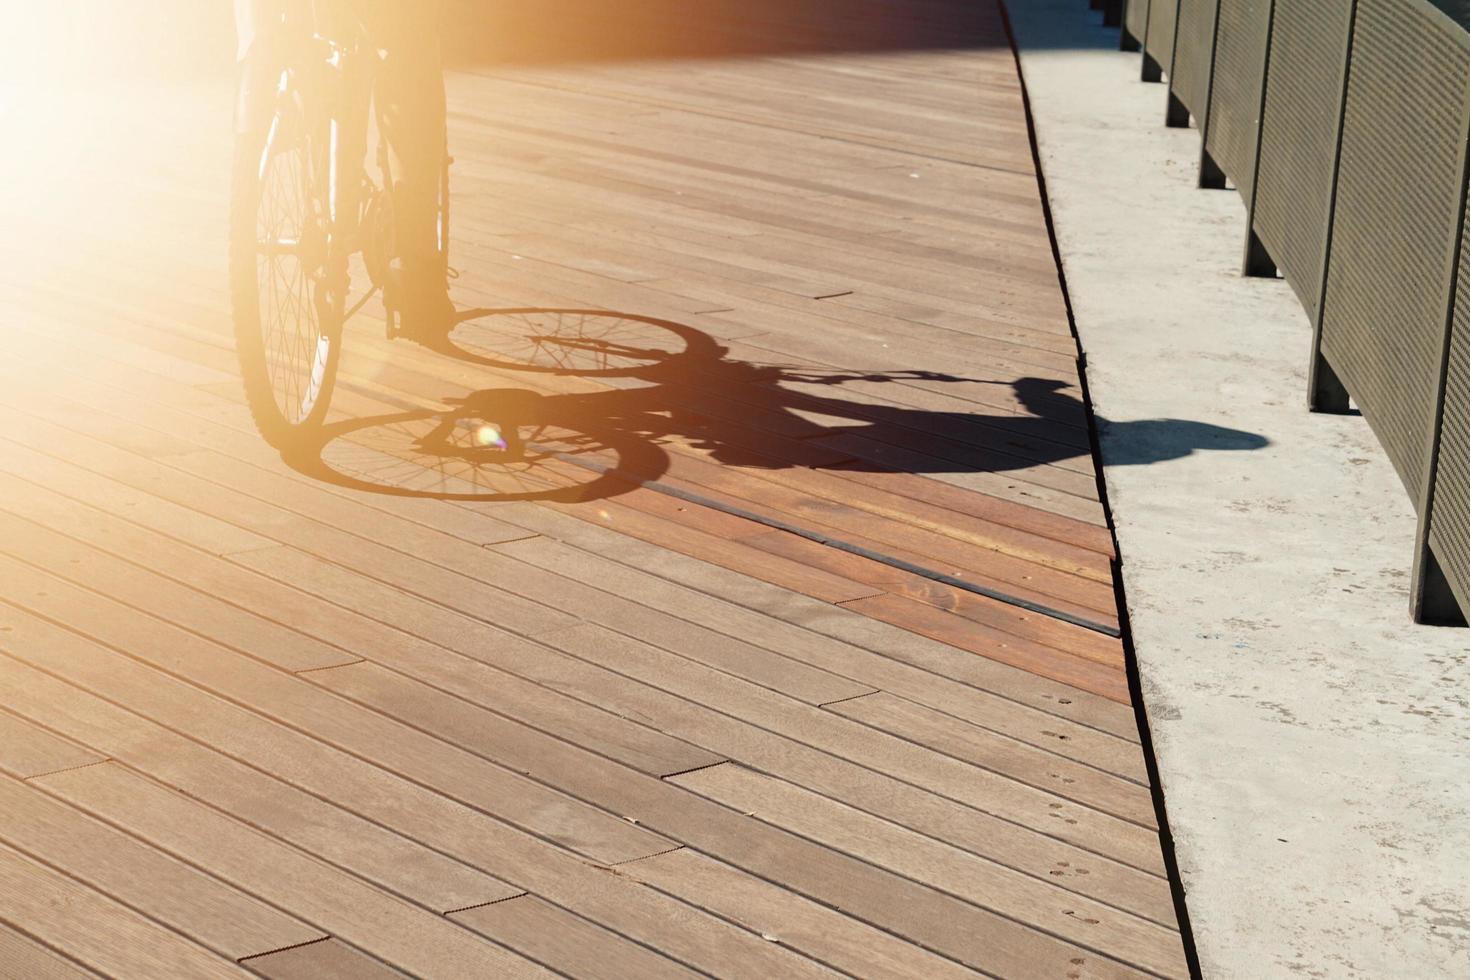 silueta de sombra de bicicleta, modo de transporte en bicicleta foto